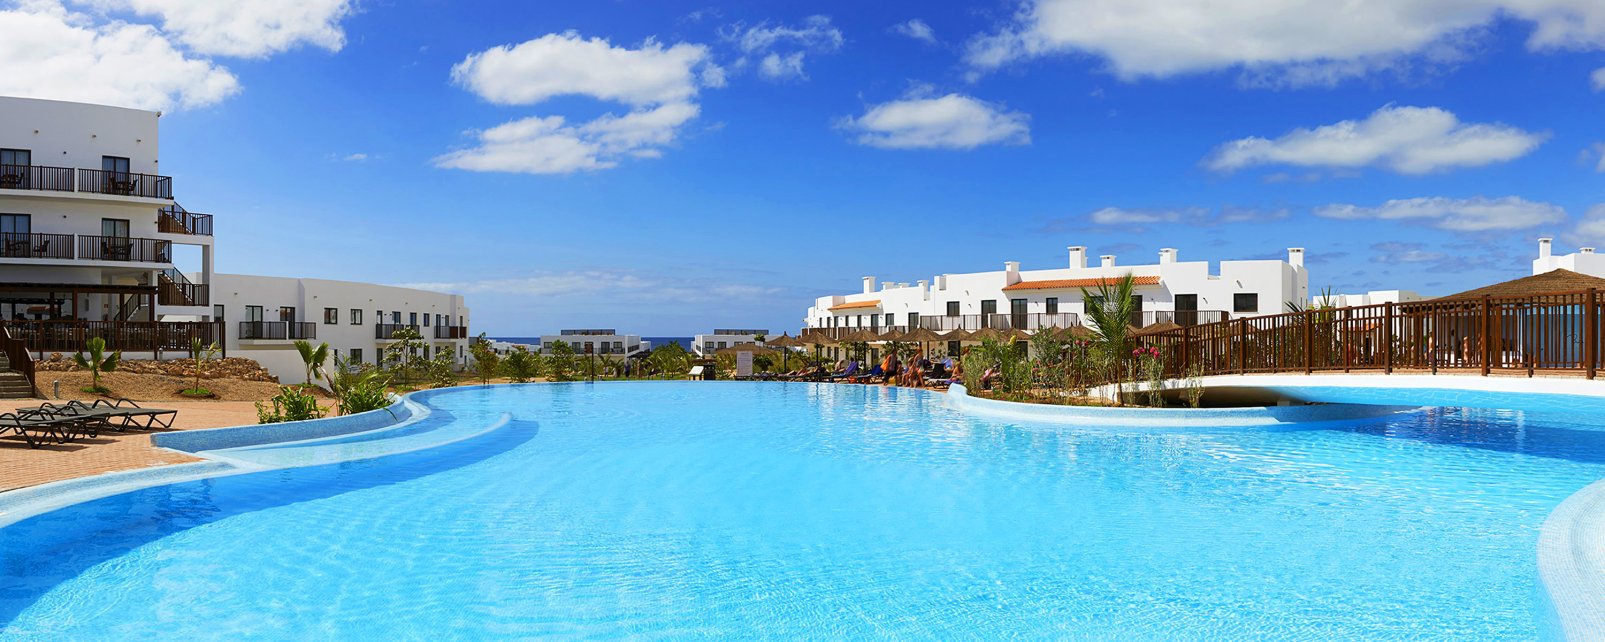 Hôtel Melia Dunas Beach Resort & Spa